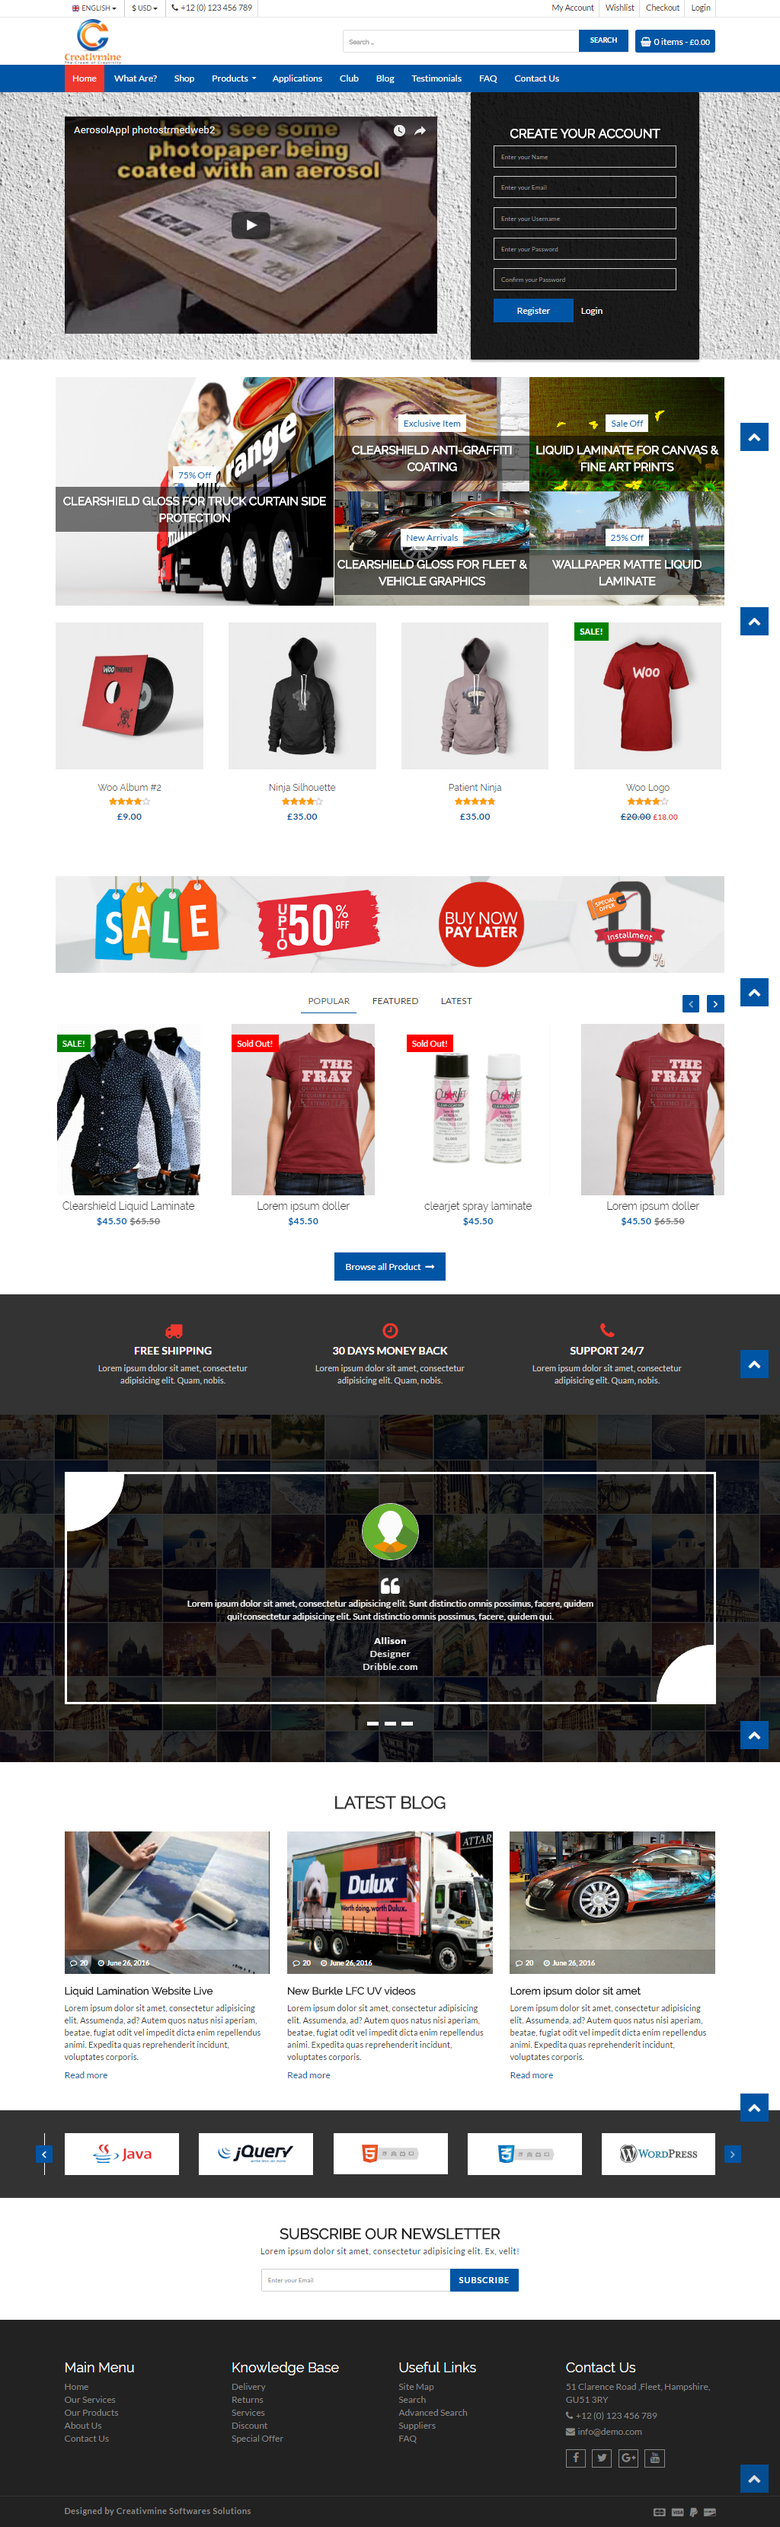 Wordpress E-commerce Online Store